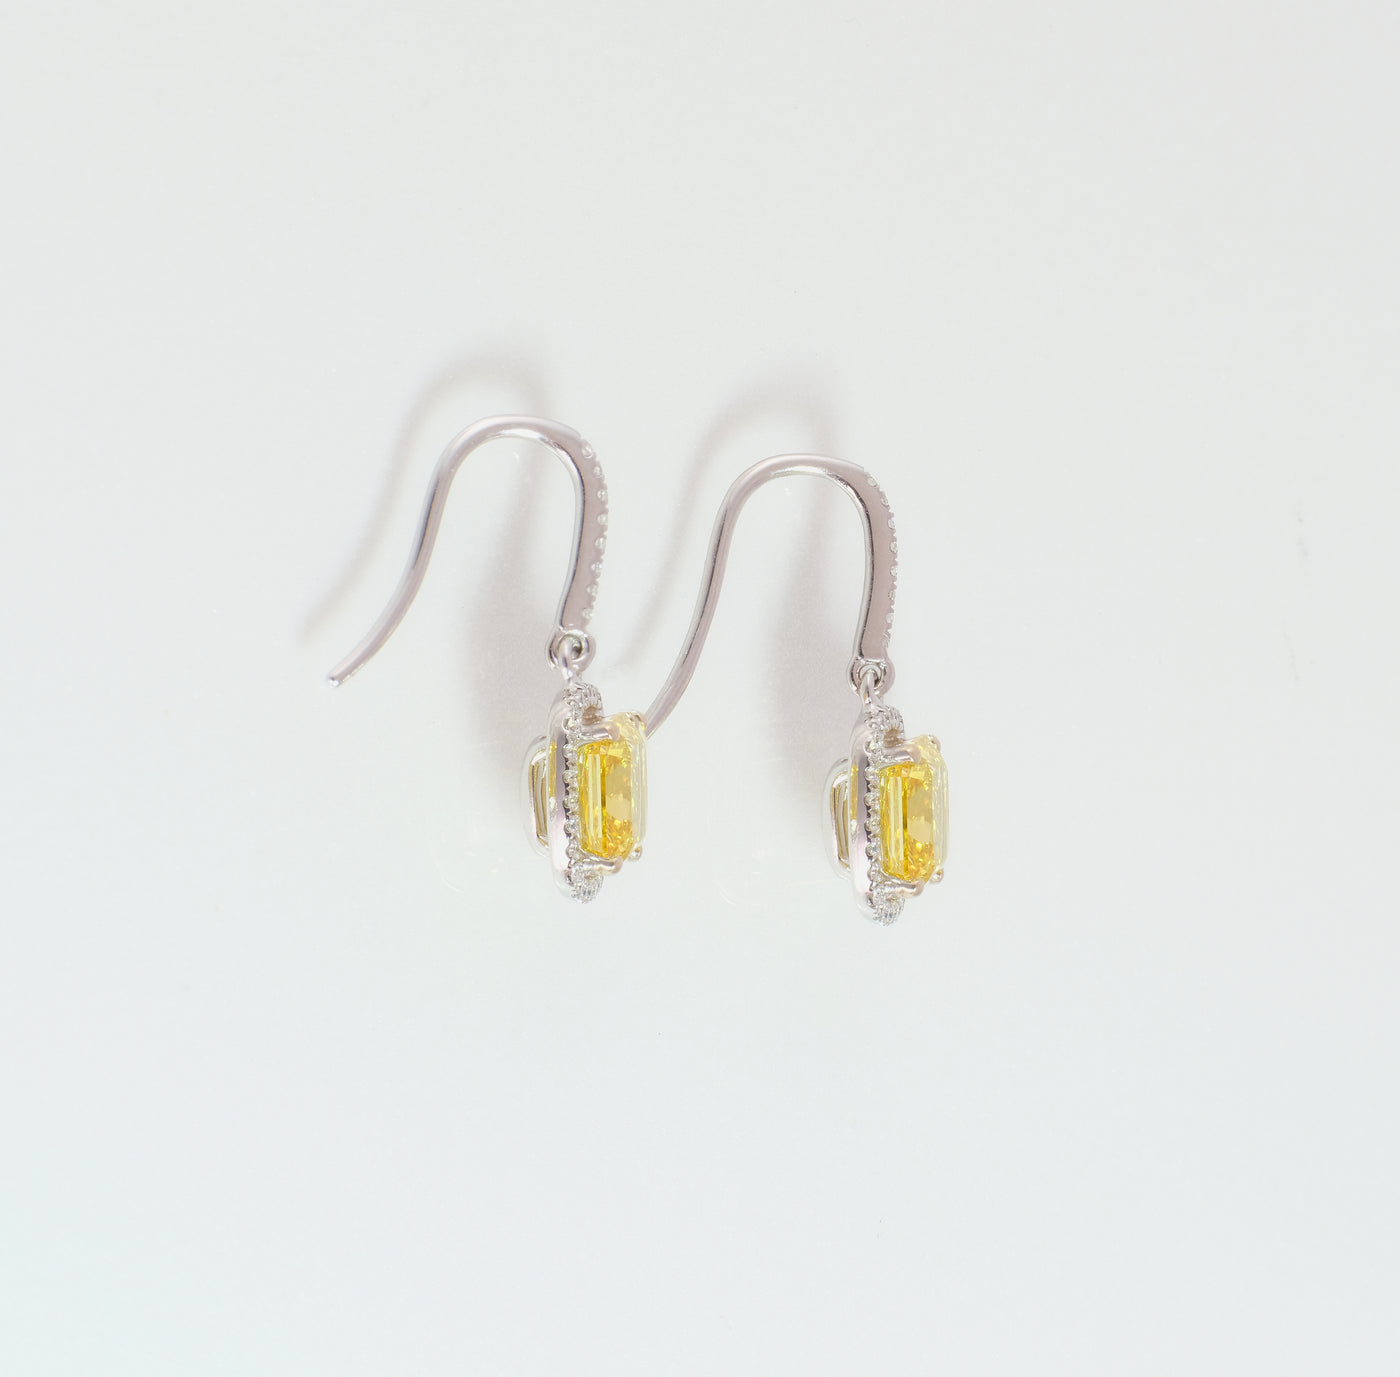 "Cheerful Glow" 2.04 Carat Fancy Vivid Yellow Diamond Drop Earrings GIA